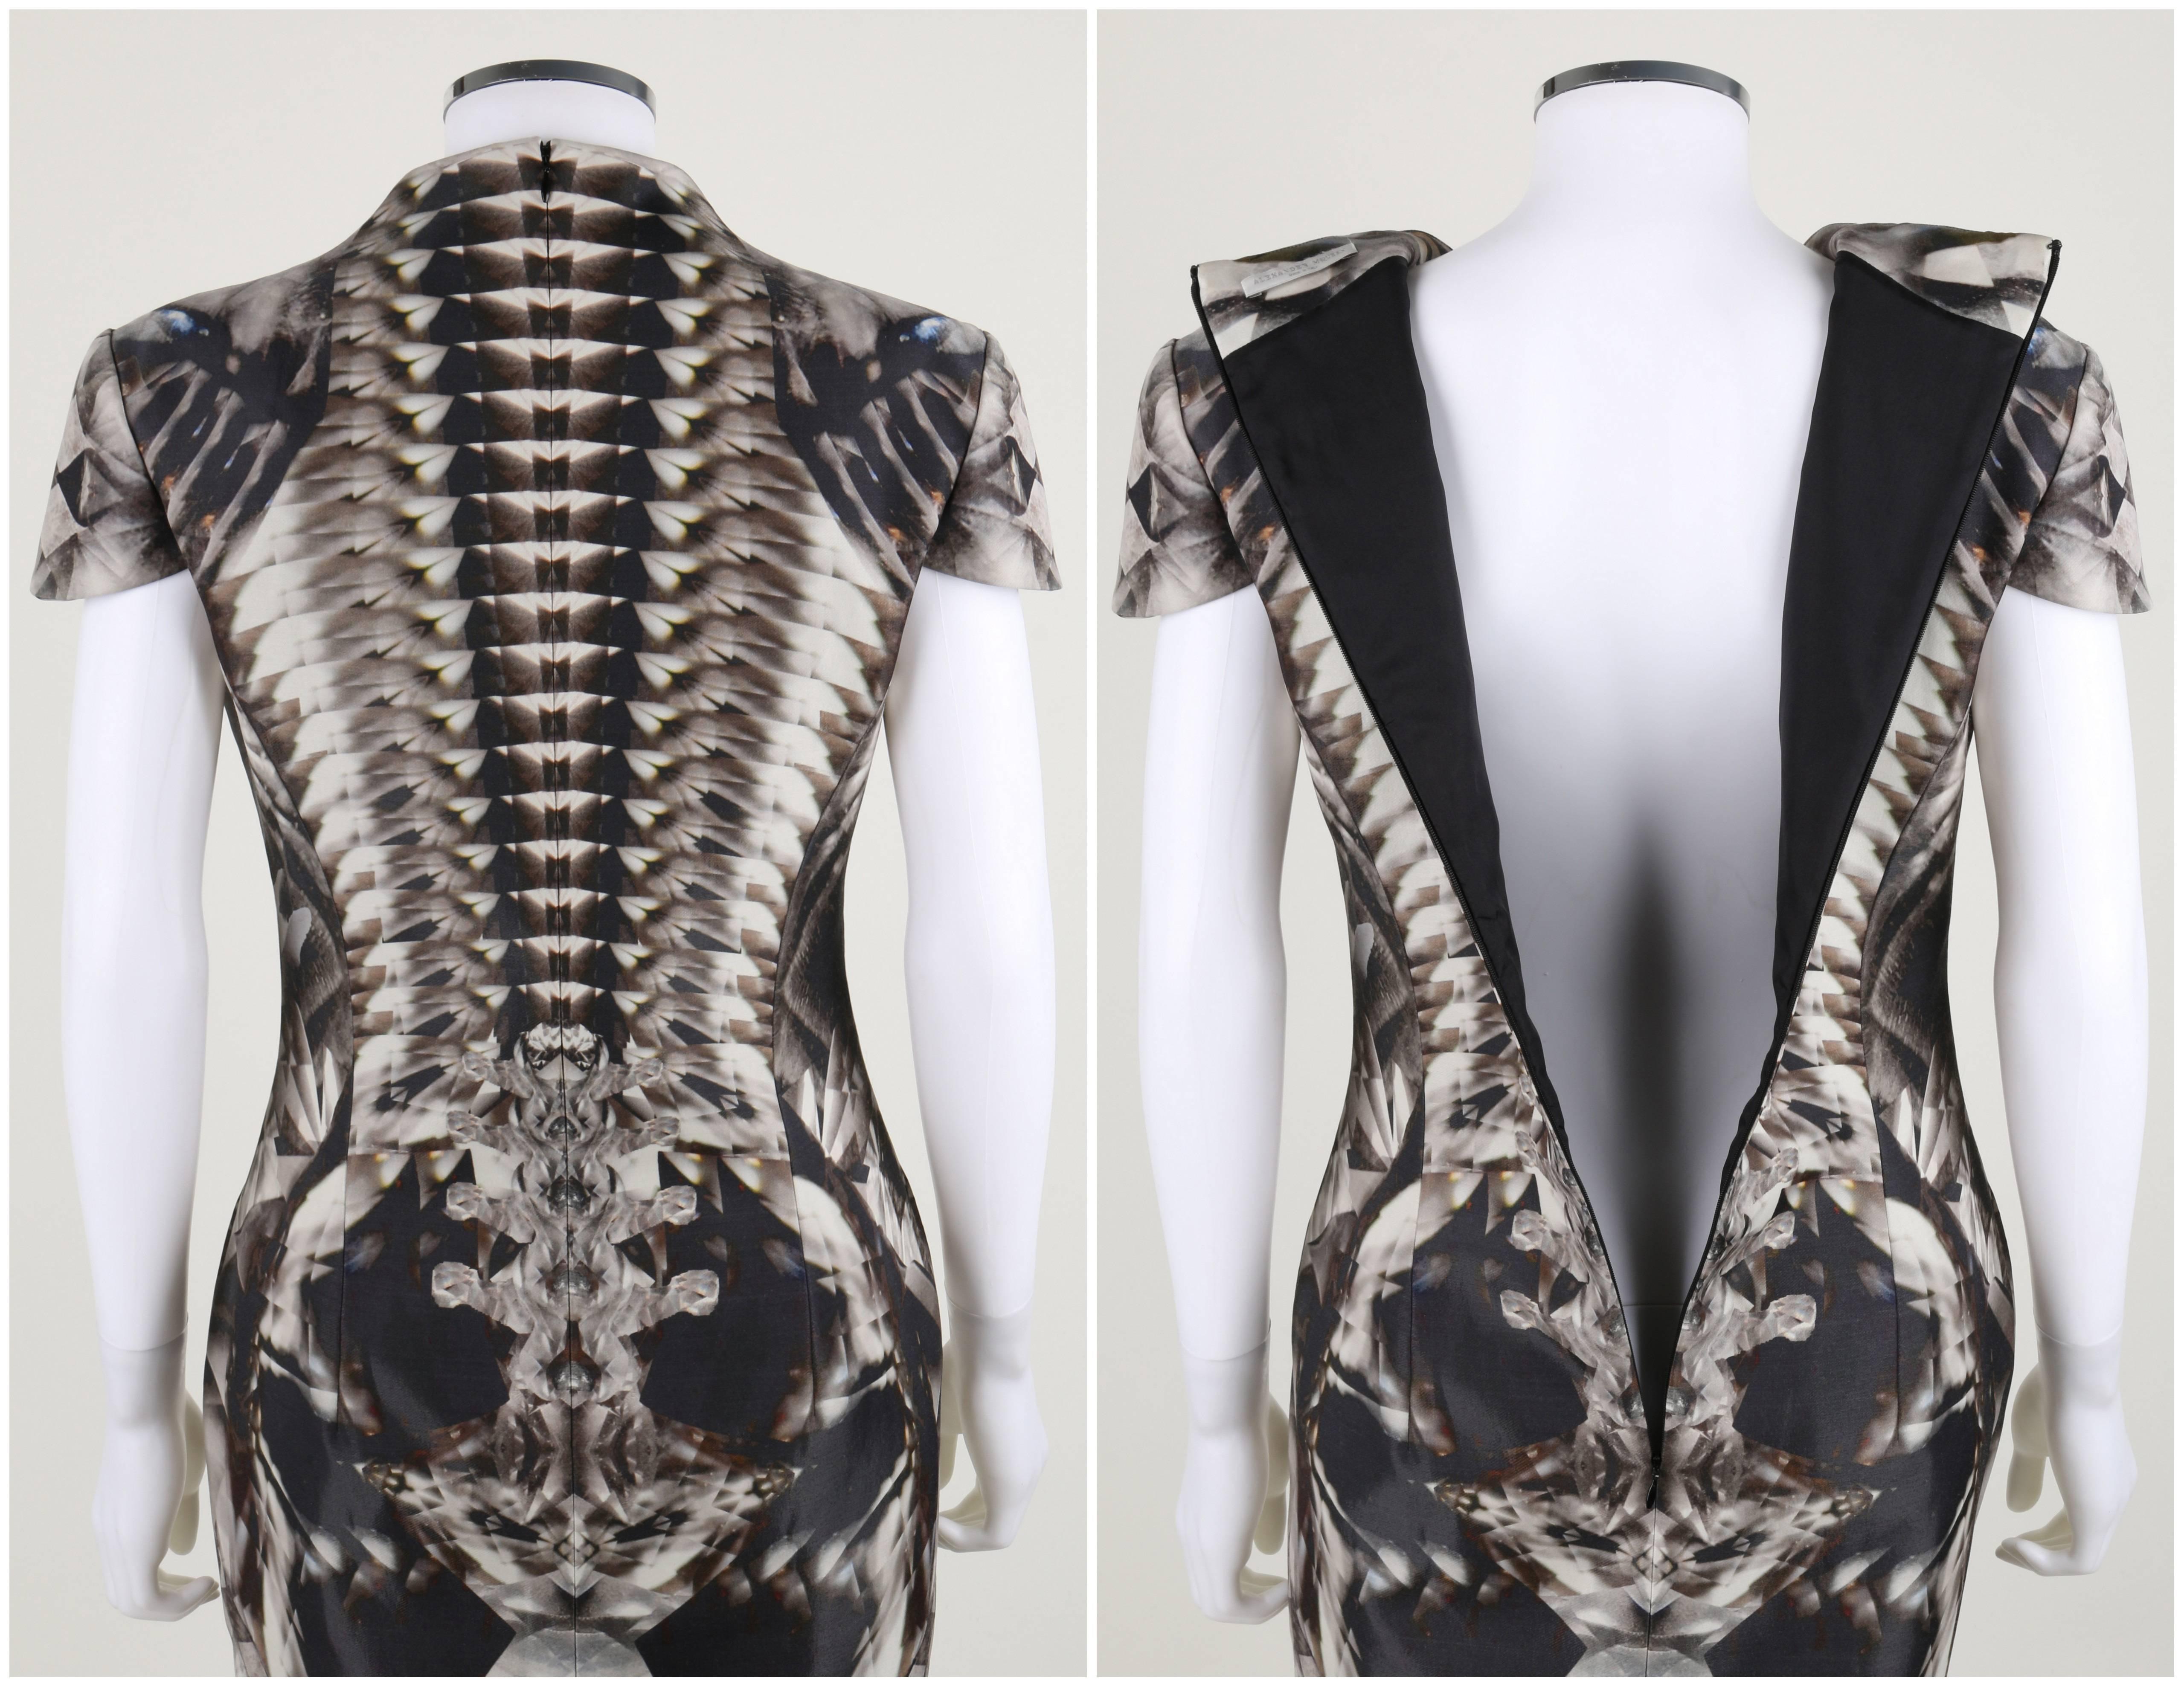 Women's ALEXANDER McQUEEN S/S 2009 Iconic Skeleton Kaleidoscope Print Dress Size 44